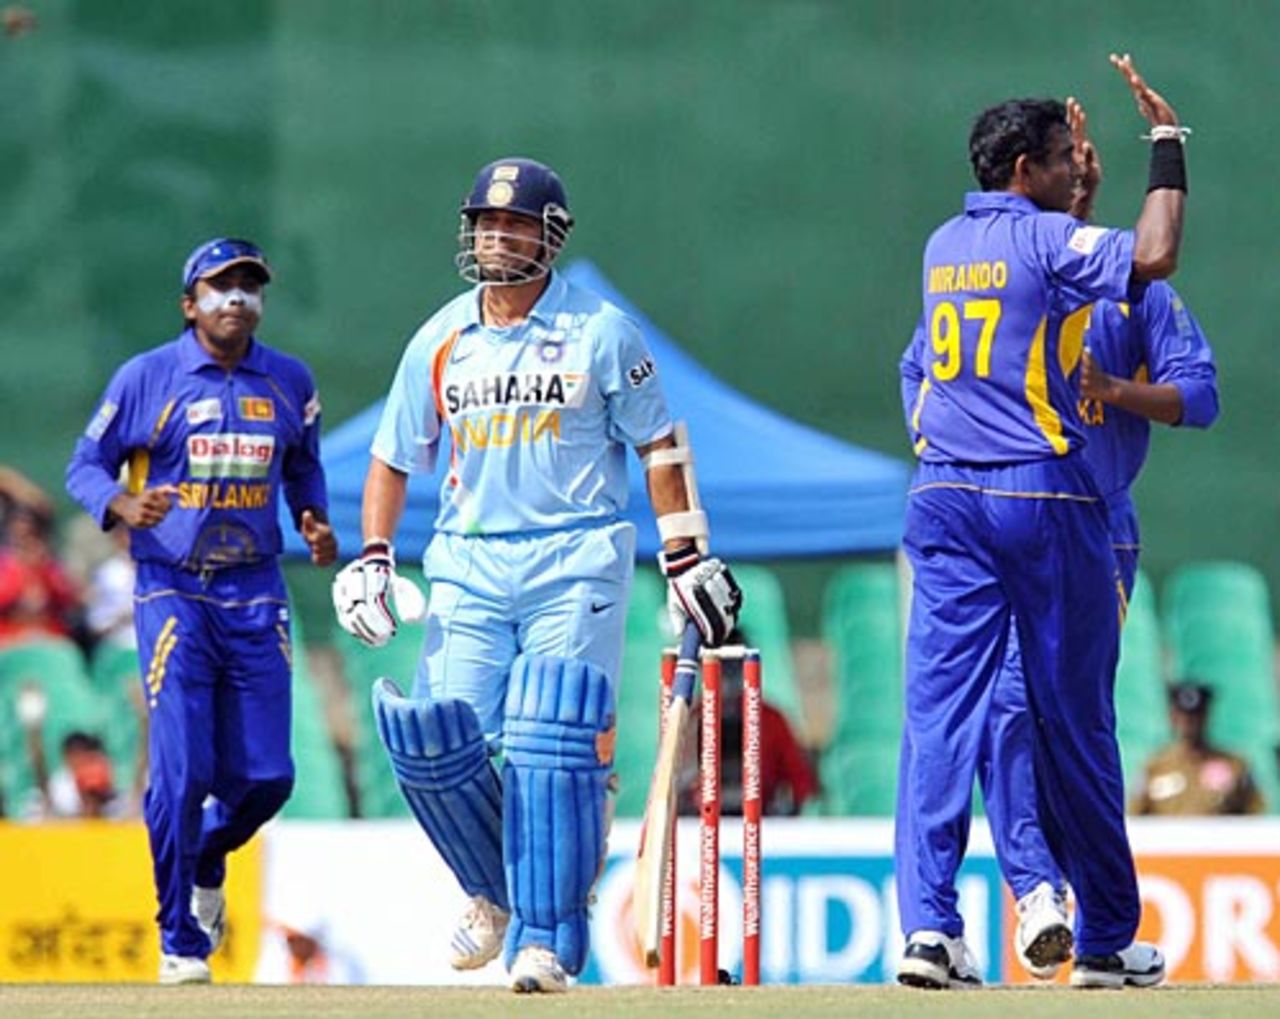 Sri Lanka celebrate the dismissal of Sachin Tendulkar, Sri Lanka v India, 1st ODI, Dambulla, January 28, 2009